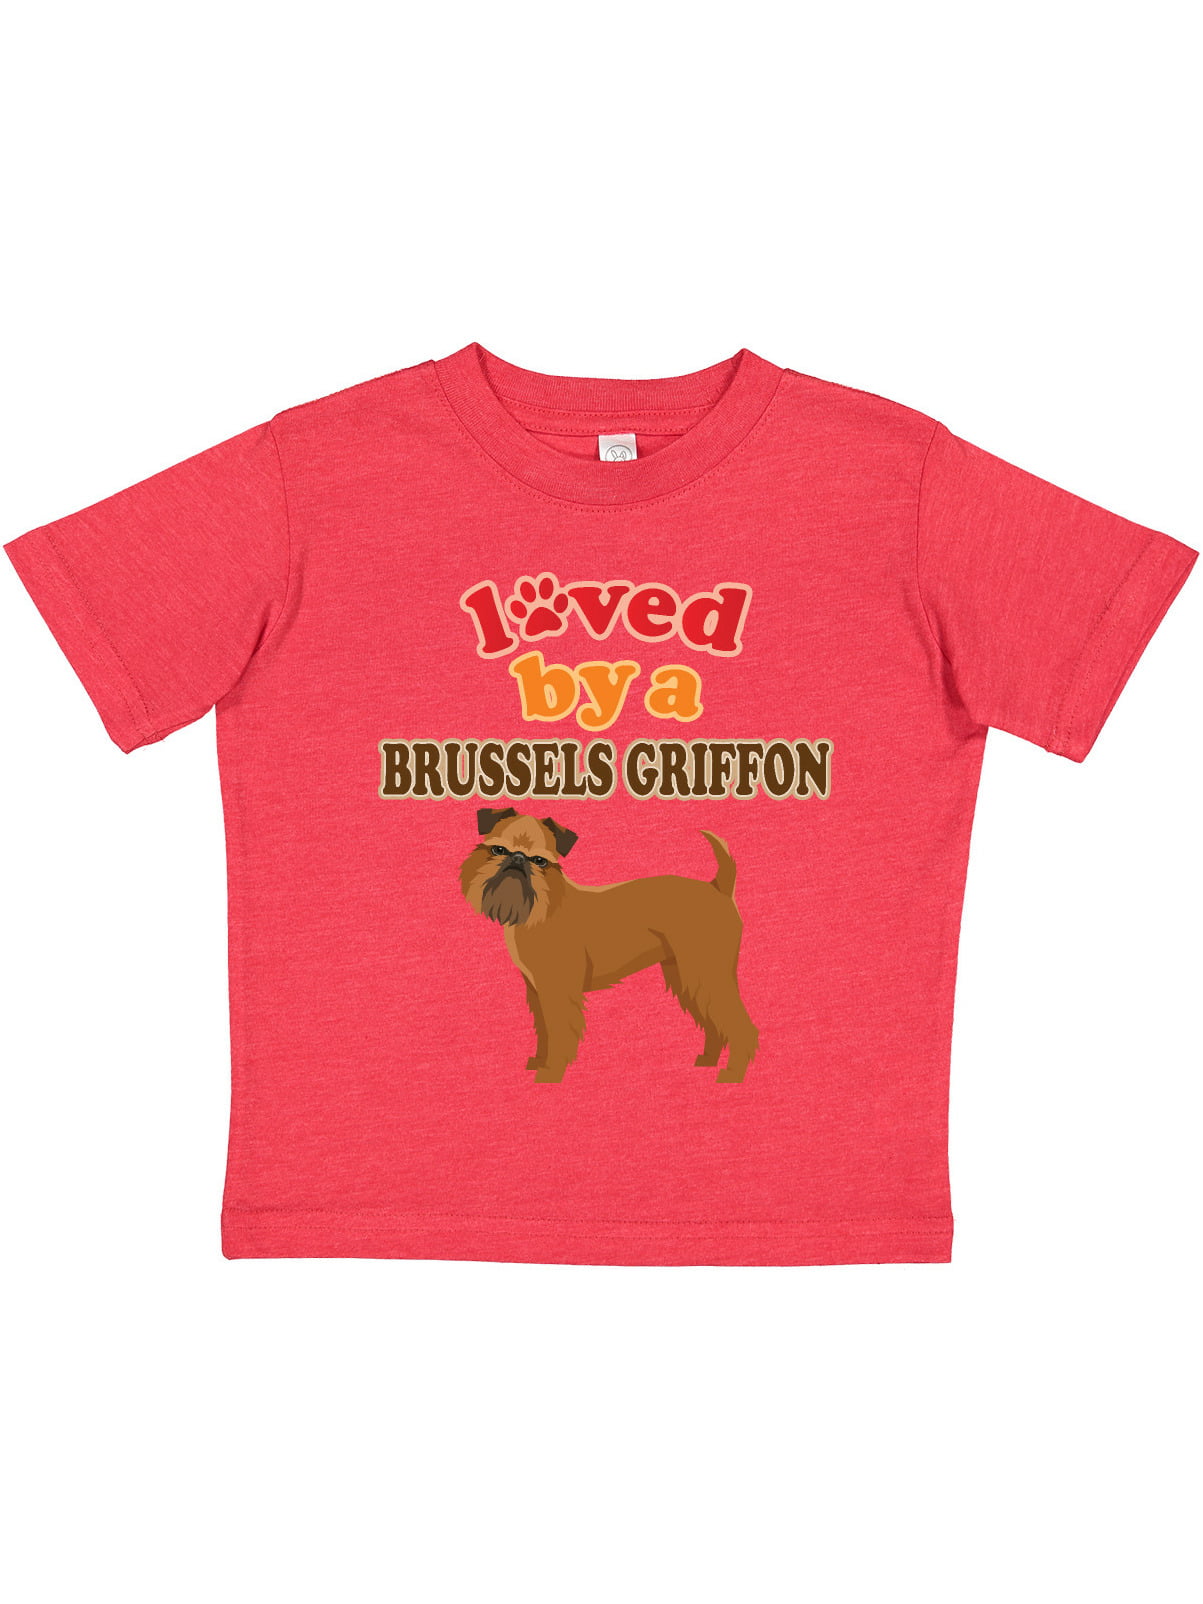 Brussels Griffon Owner Tee Brussels Griffon T shirt Brussels Griffon Dog Gift Brussels Griffon Lover Gift Unisex Cotton T shirt